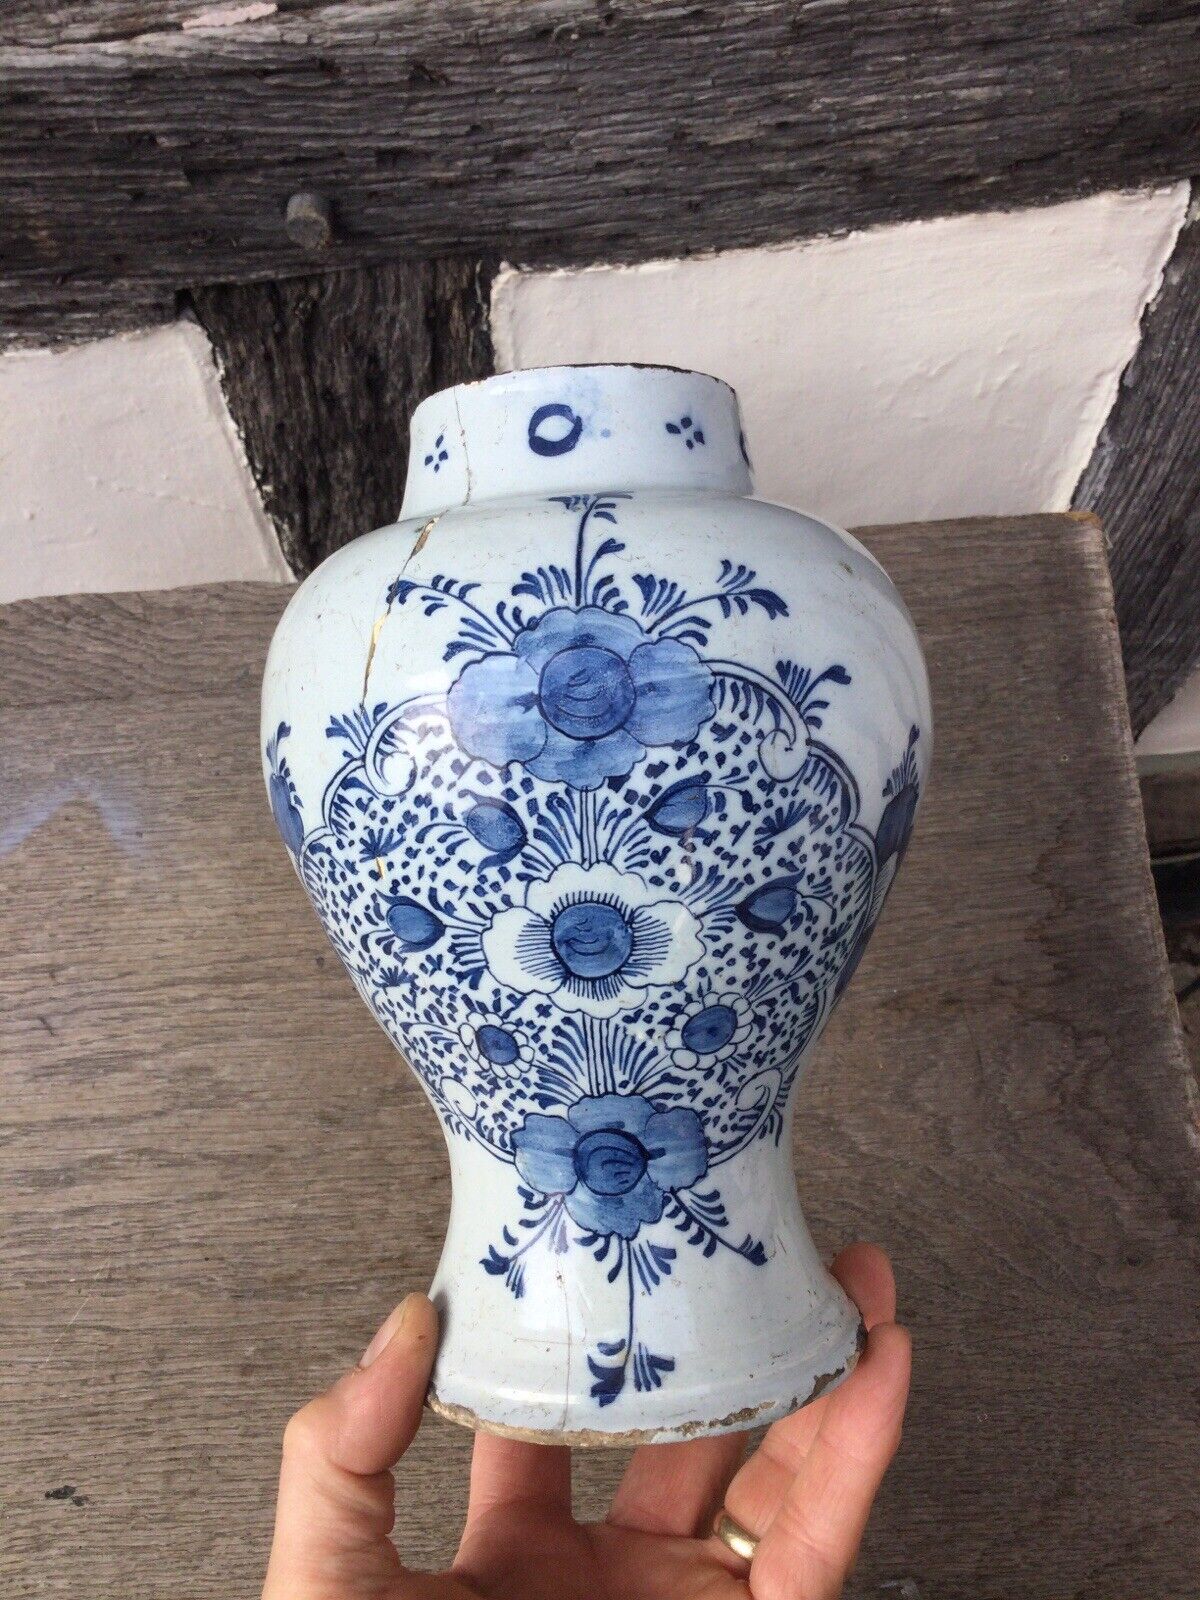 A Lovely Original Antique 18th Century Dutch Delft Pottery Jar or Vessel